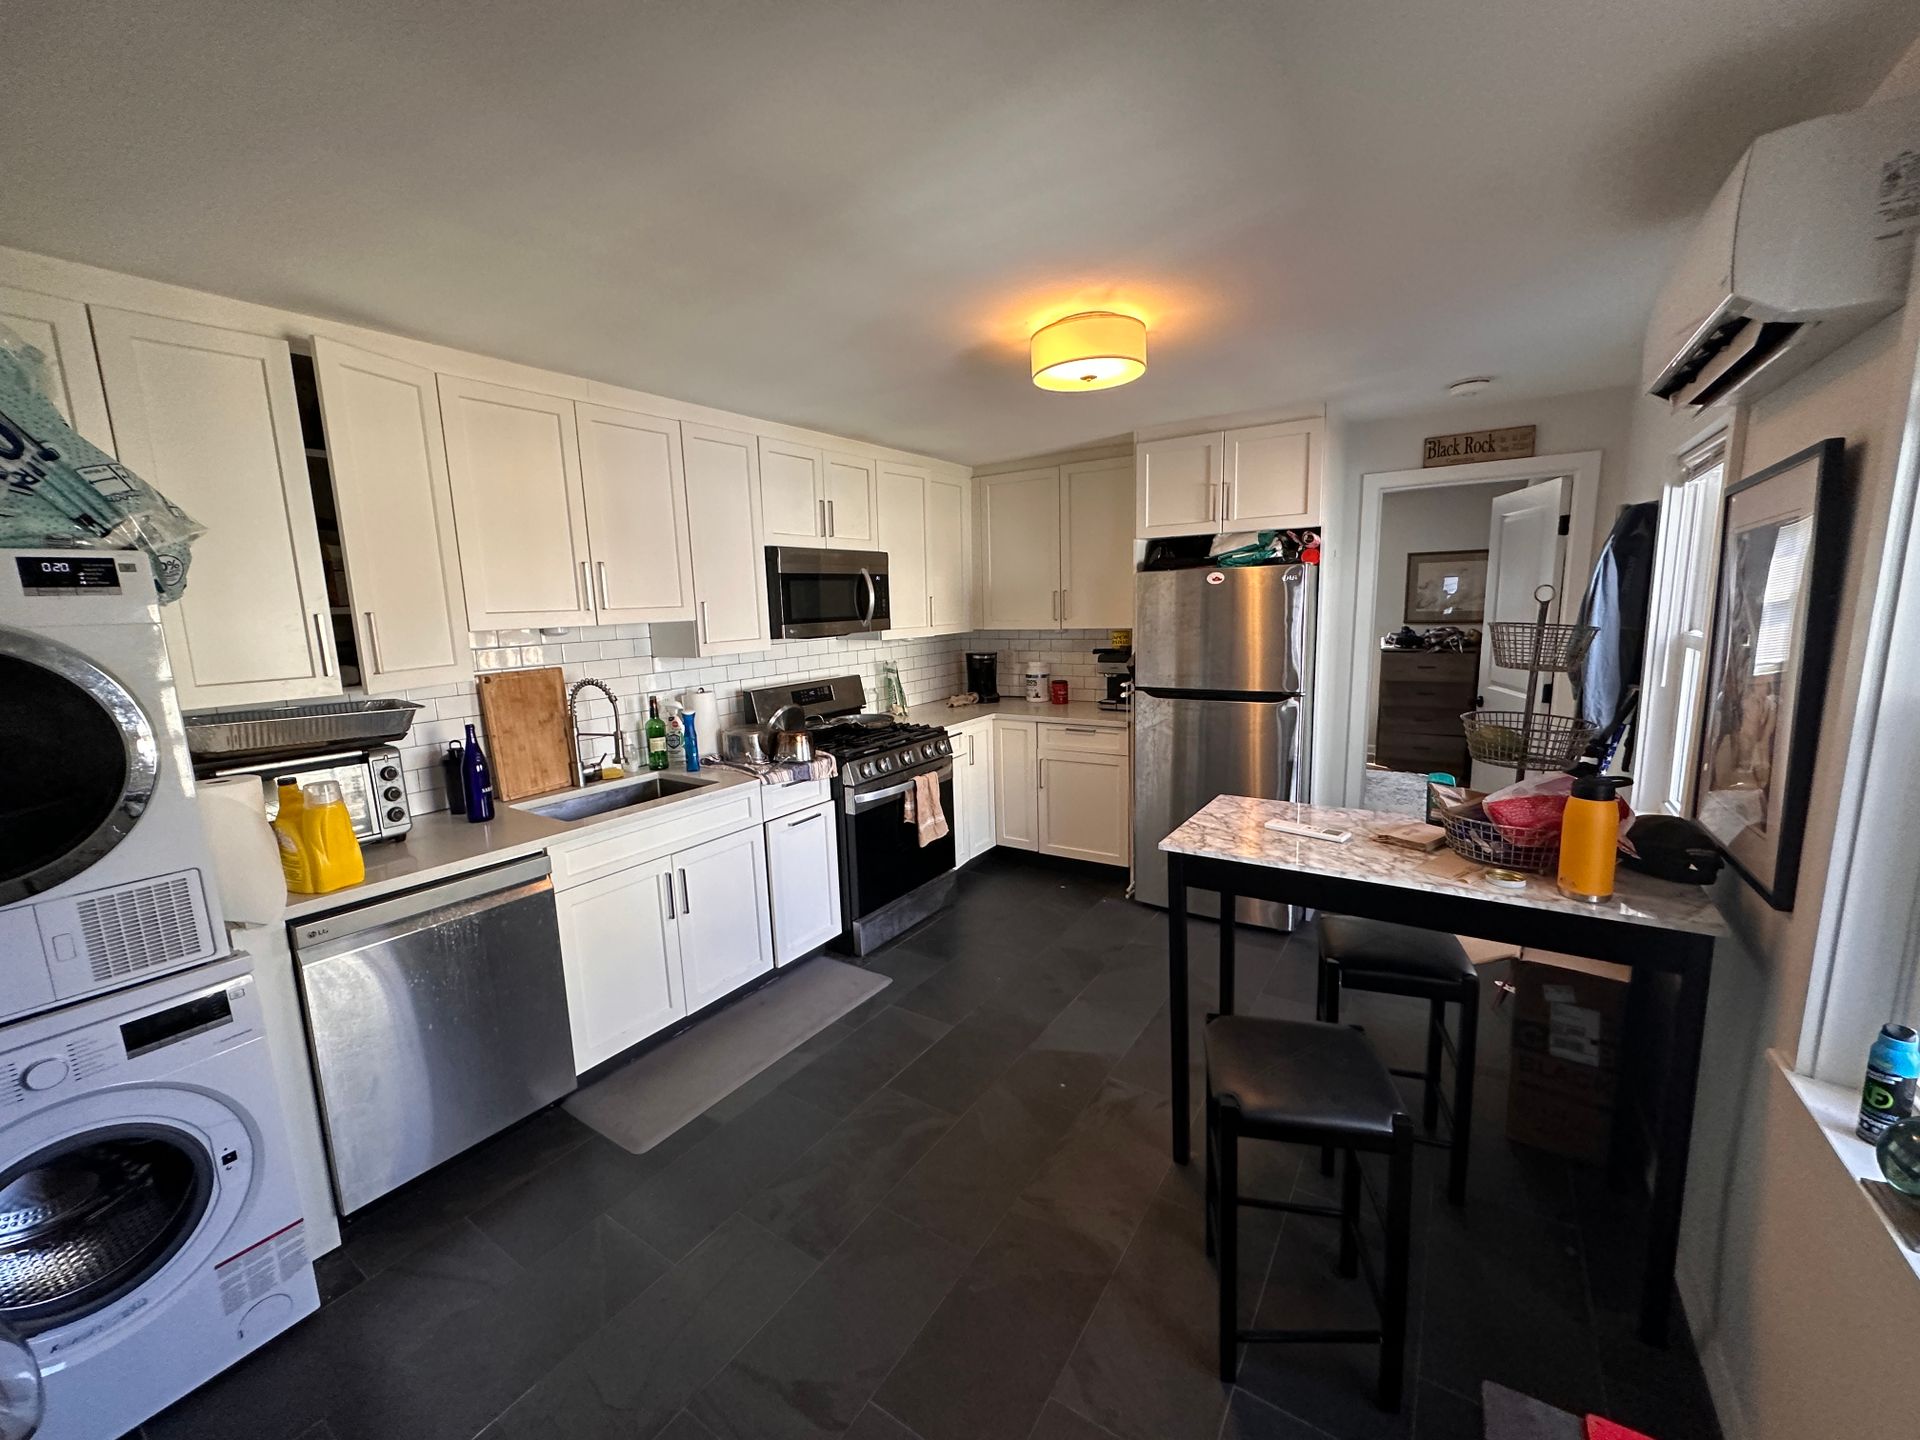 Photos of apartment on Humboldt Pl.,Boston MA 02127